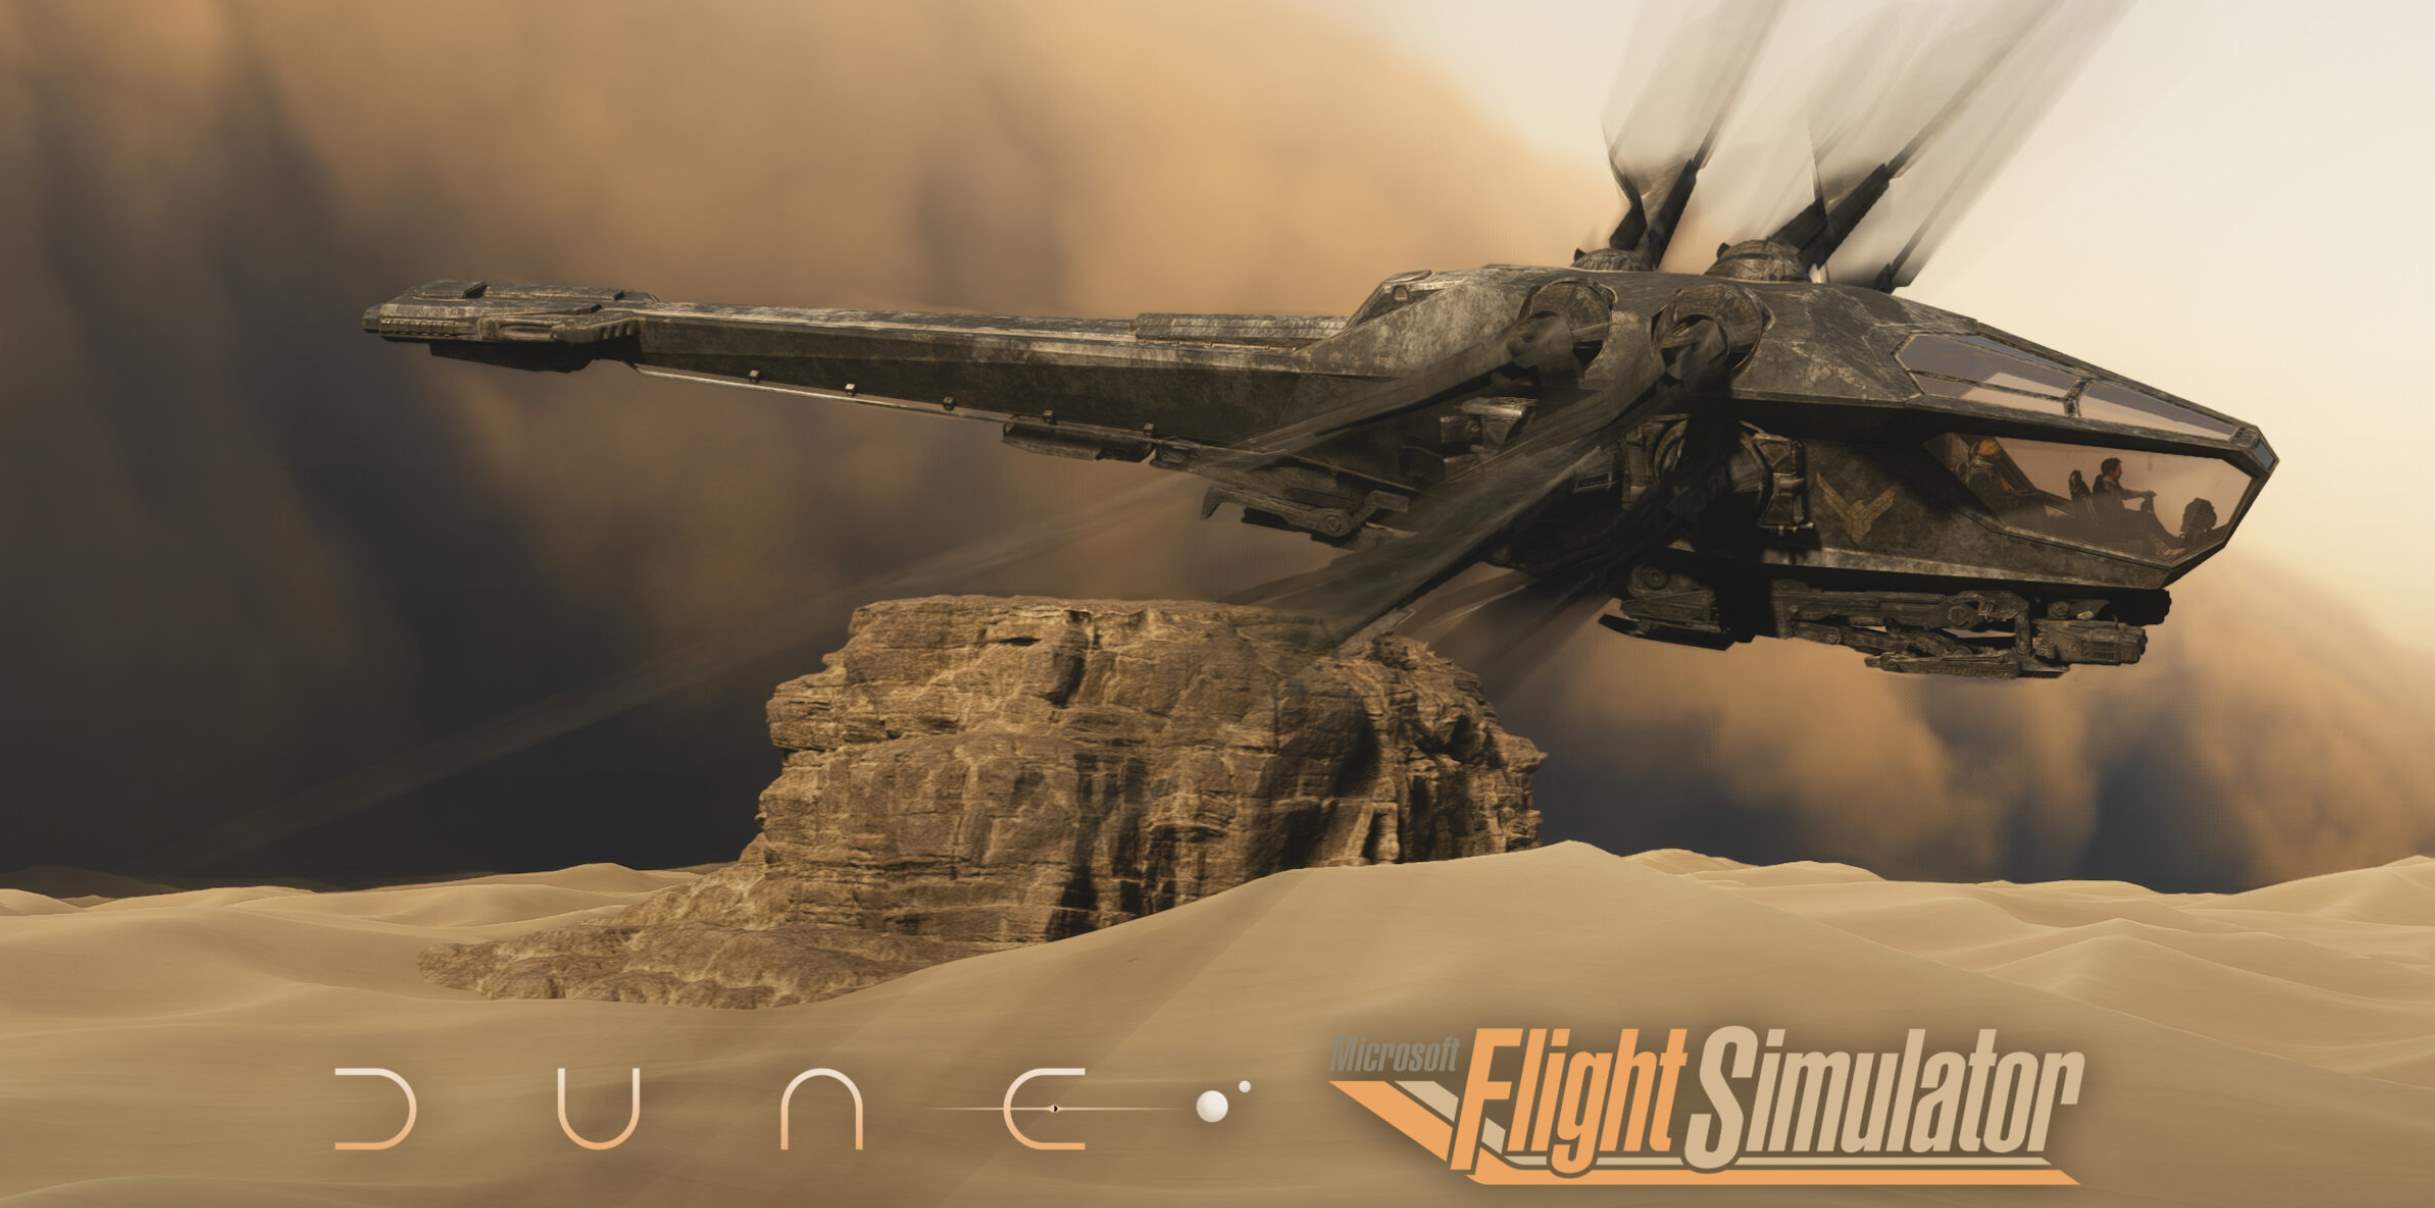 Xbox annuncia l’espansione Dune di Microsoft Fligth Simulator